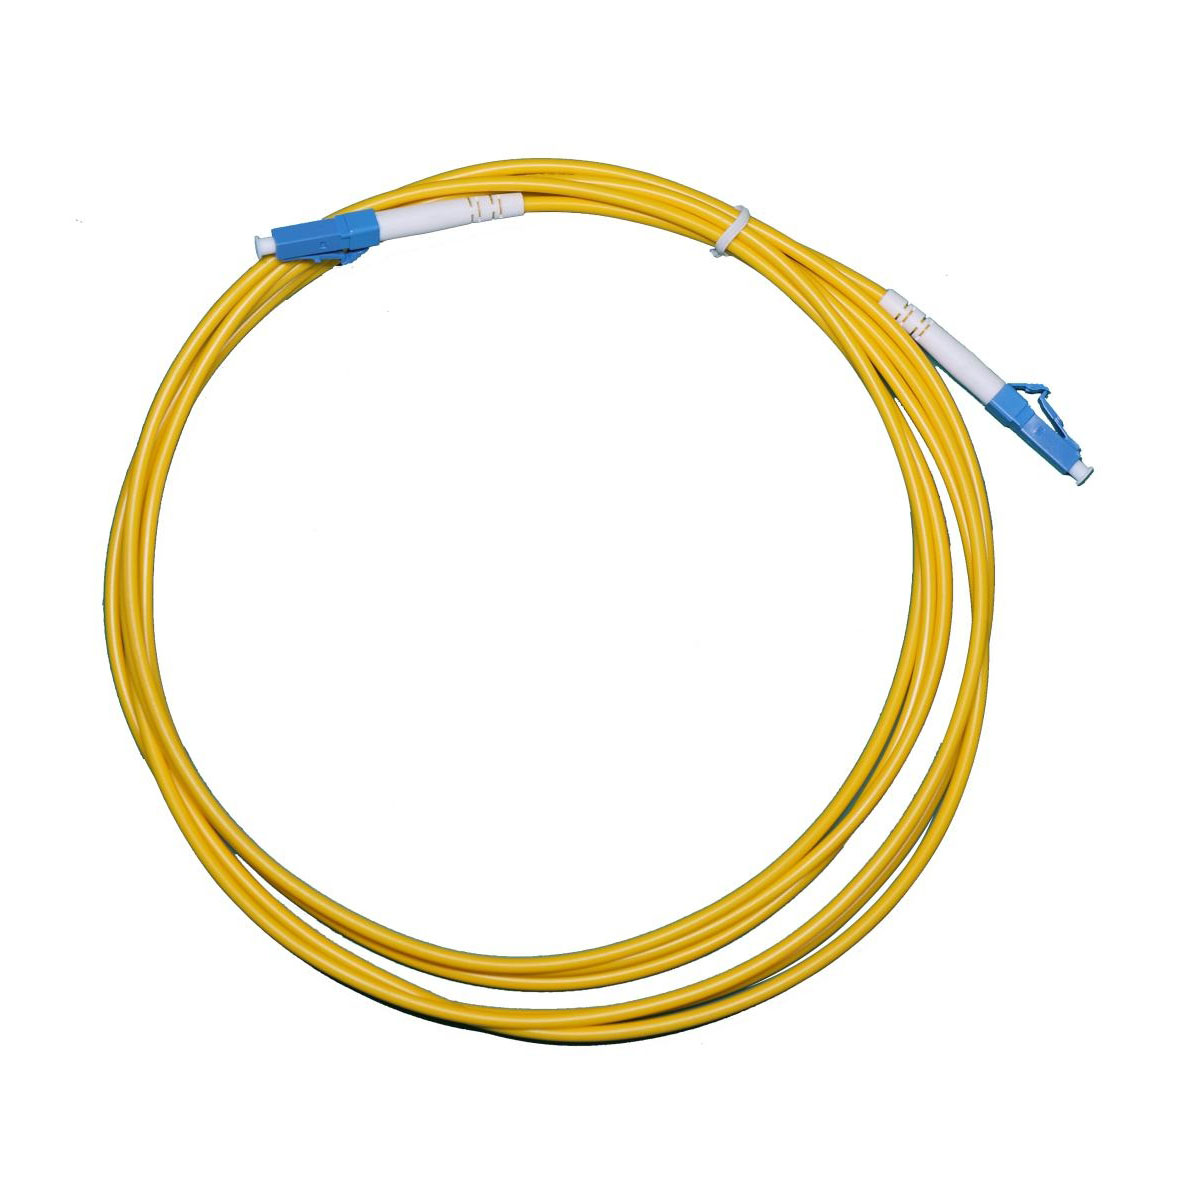 LC-LC fiber optic patch cord